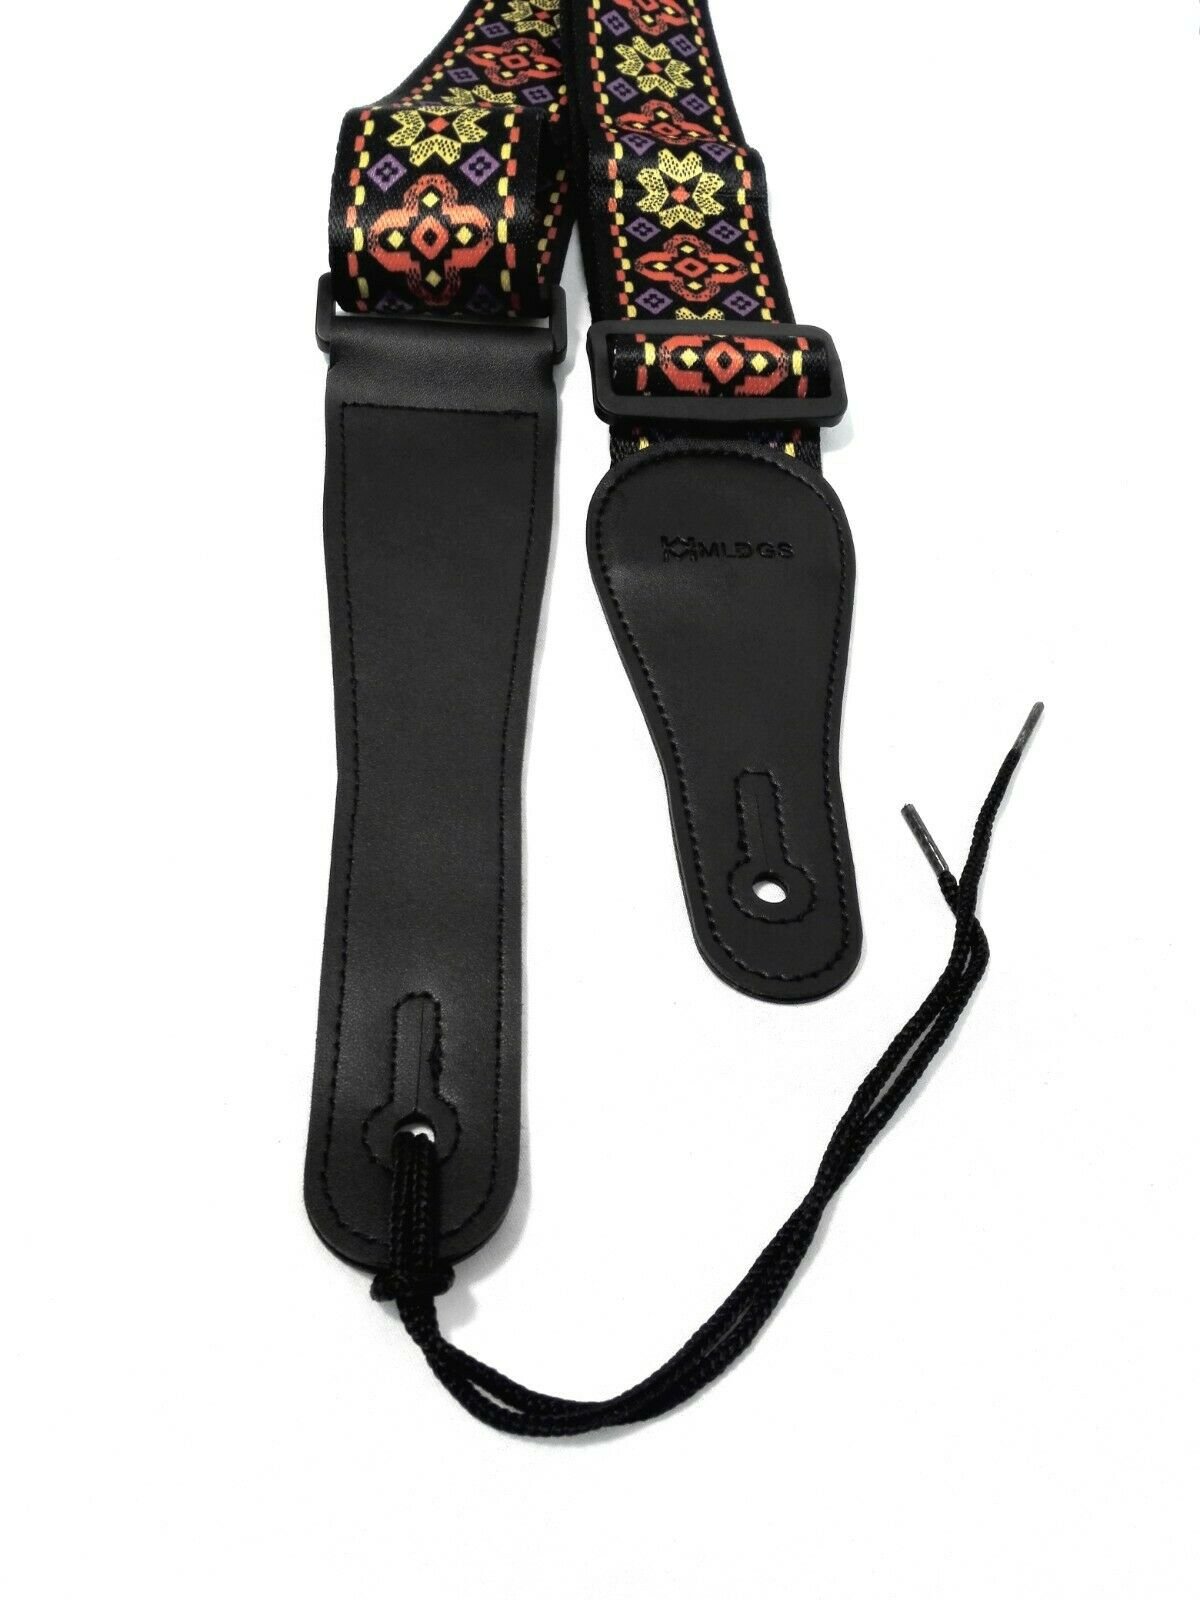 Long PU Leather End Guitar Strap,Length Adjustable 103~170cm. "Flowers", GSFLOWR